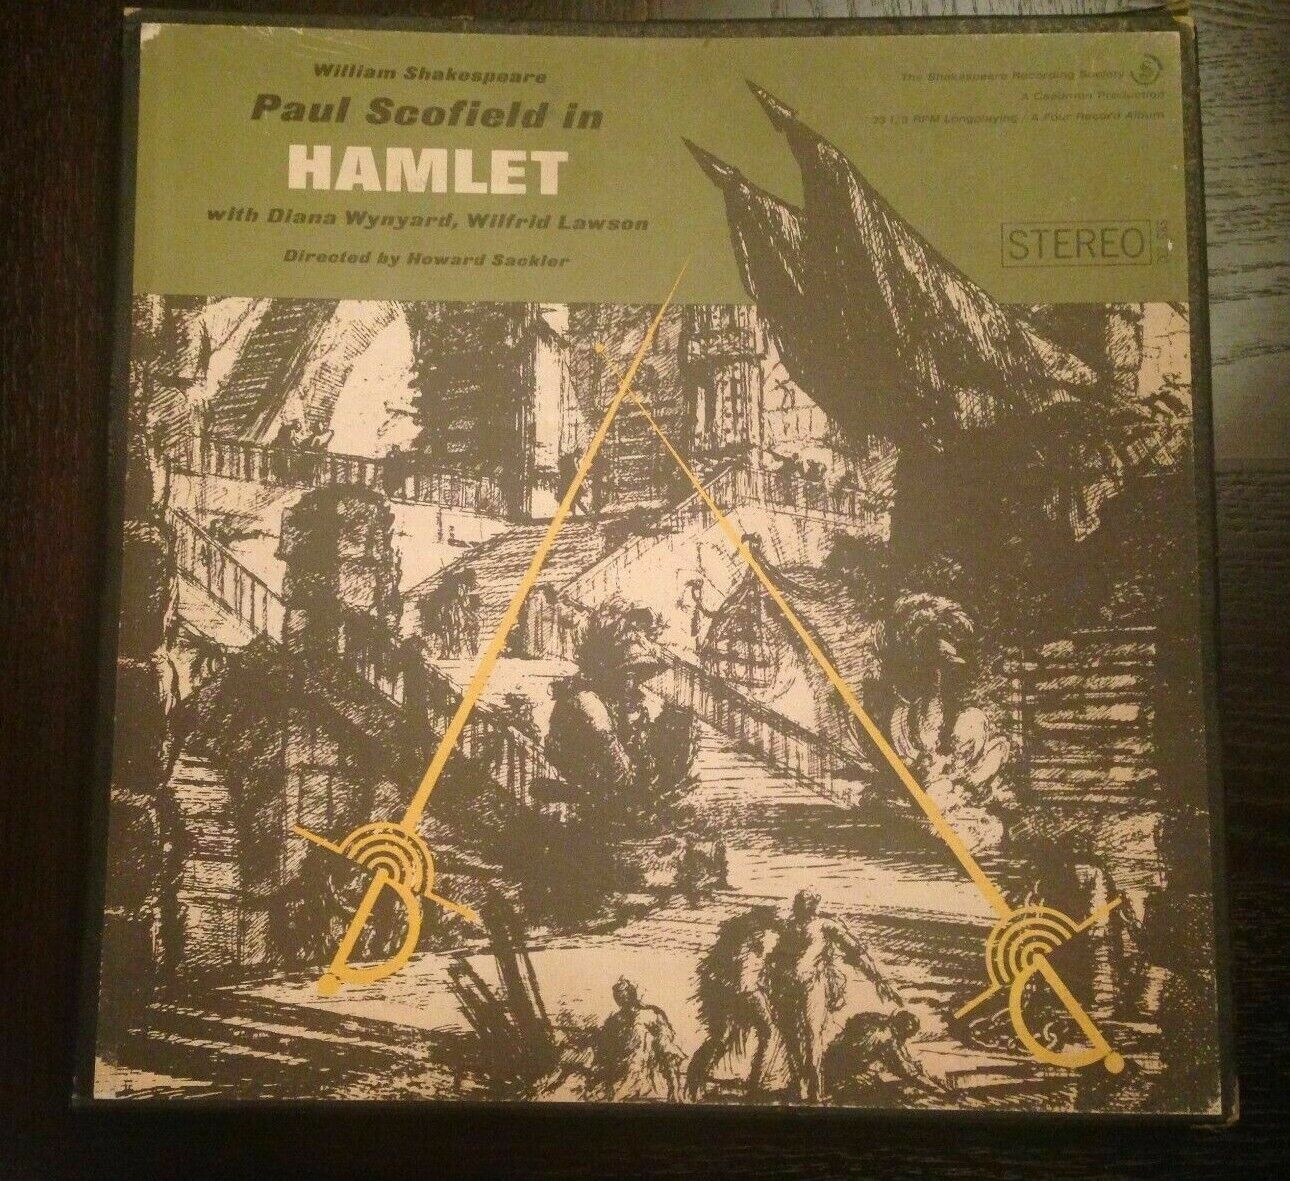 1963 William Shakespeare Paul Scofield in Hamlet Vintage 4 LP's Records Box Set